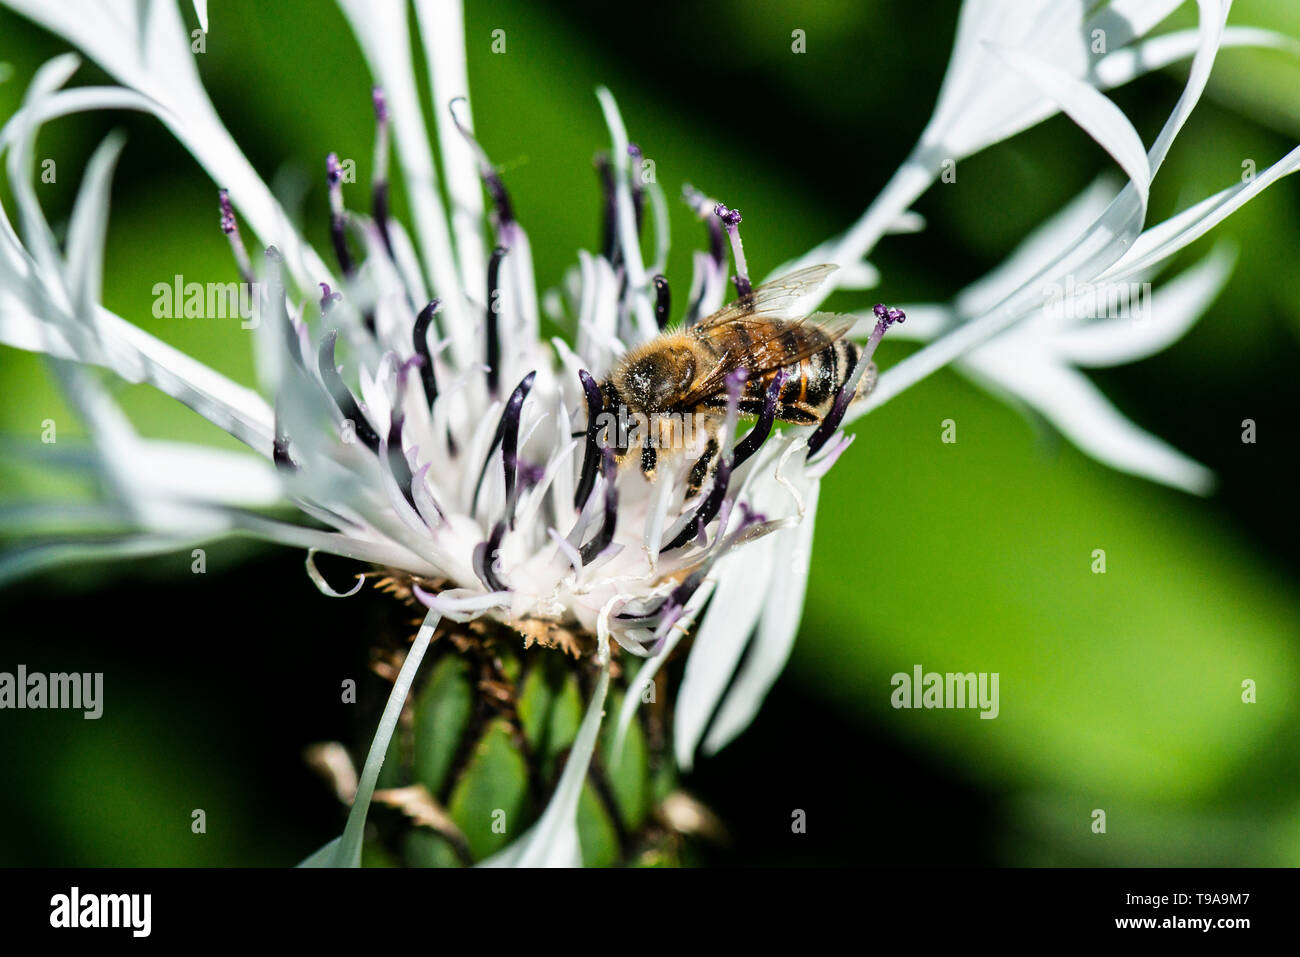 A European honey bee (Apis mellifera) on the flower of a white perennial cornflower(Centaurea montana 'Alba') Stock Photo